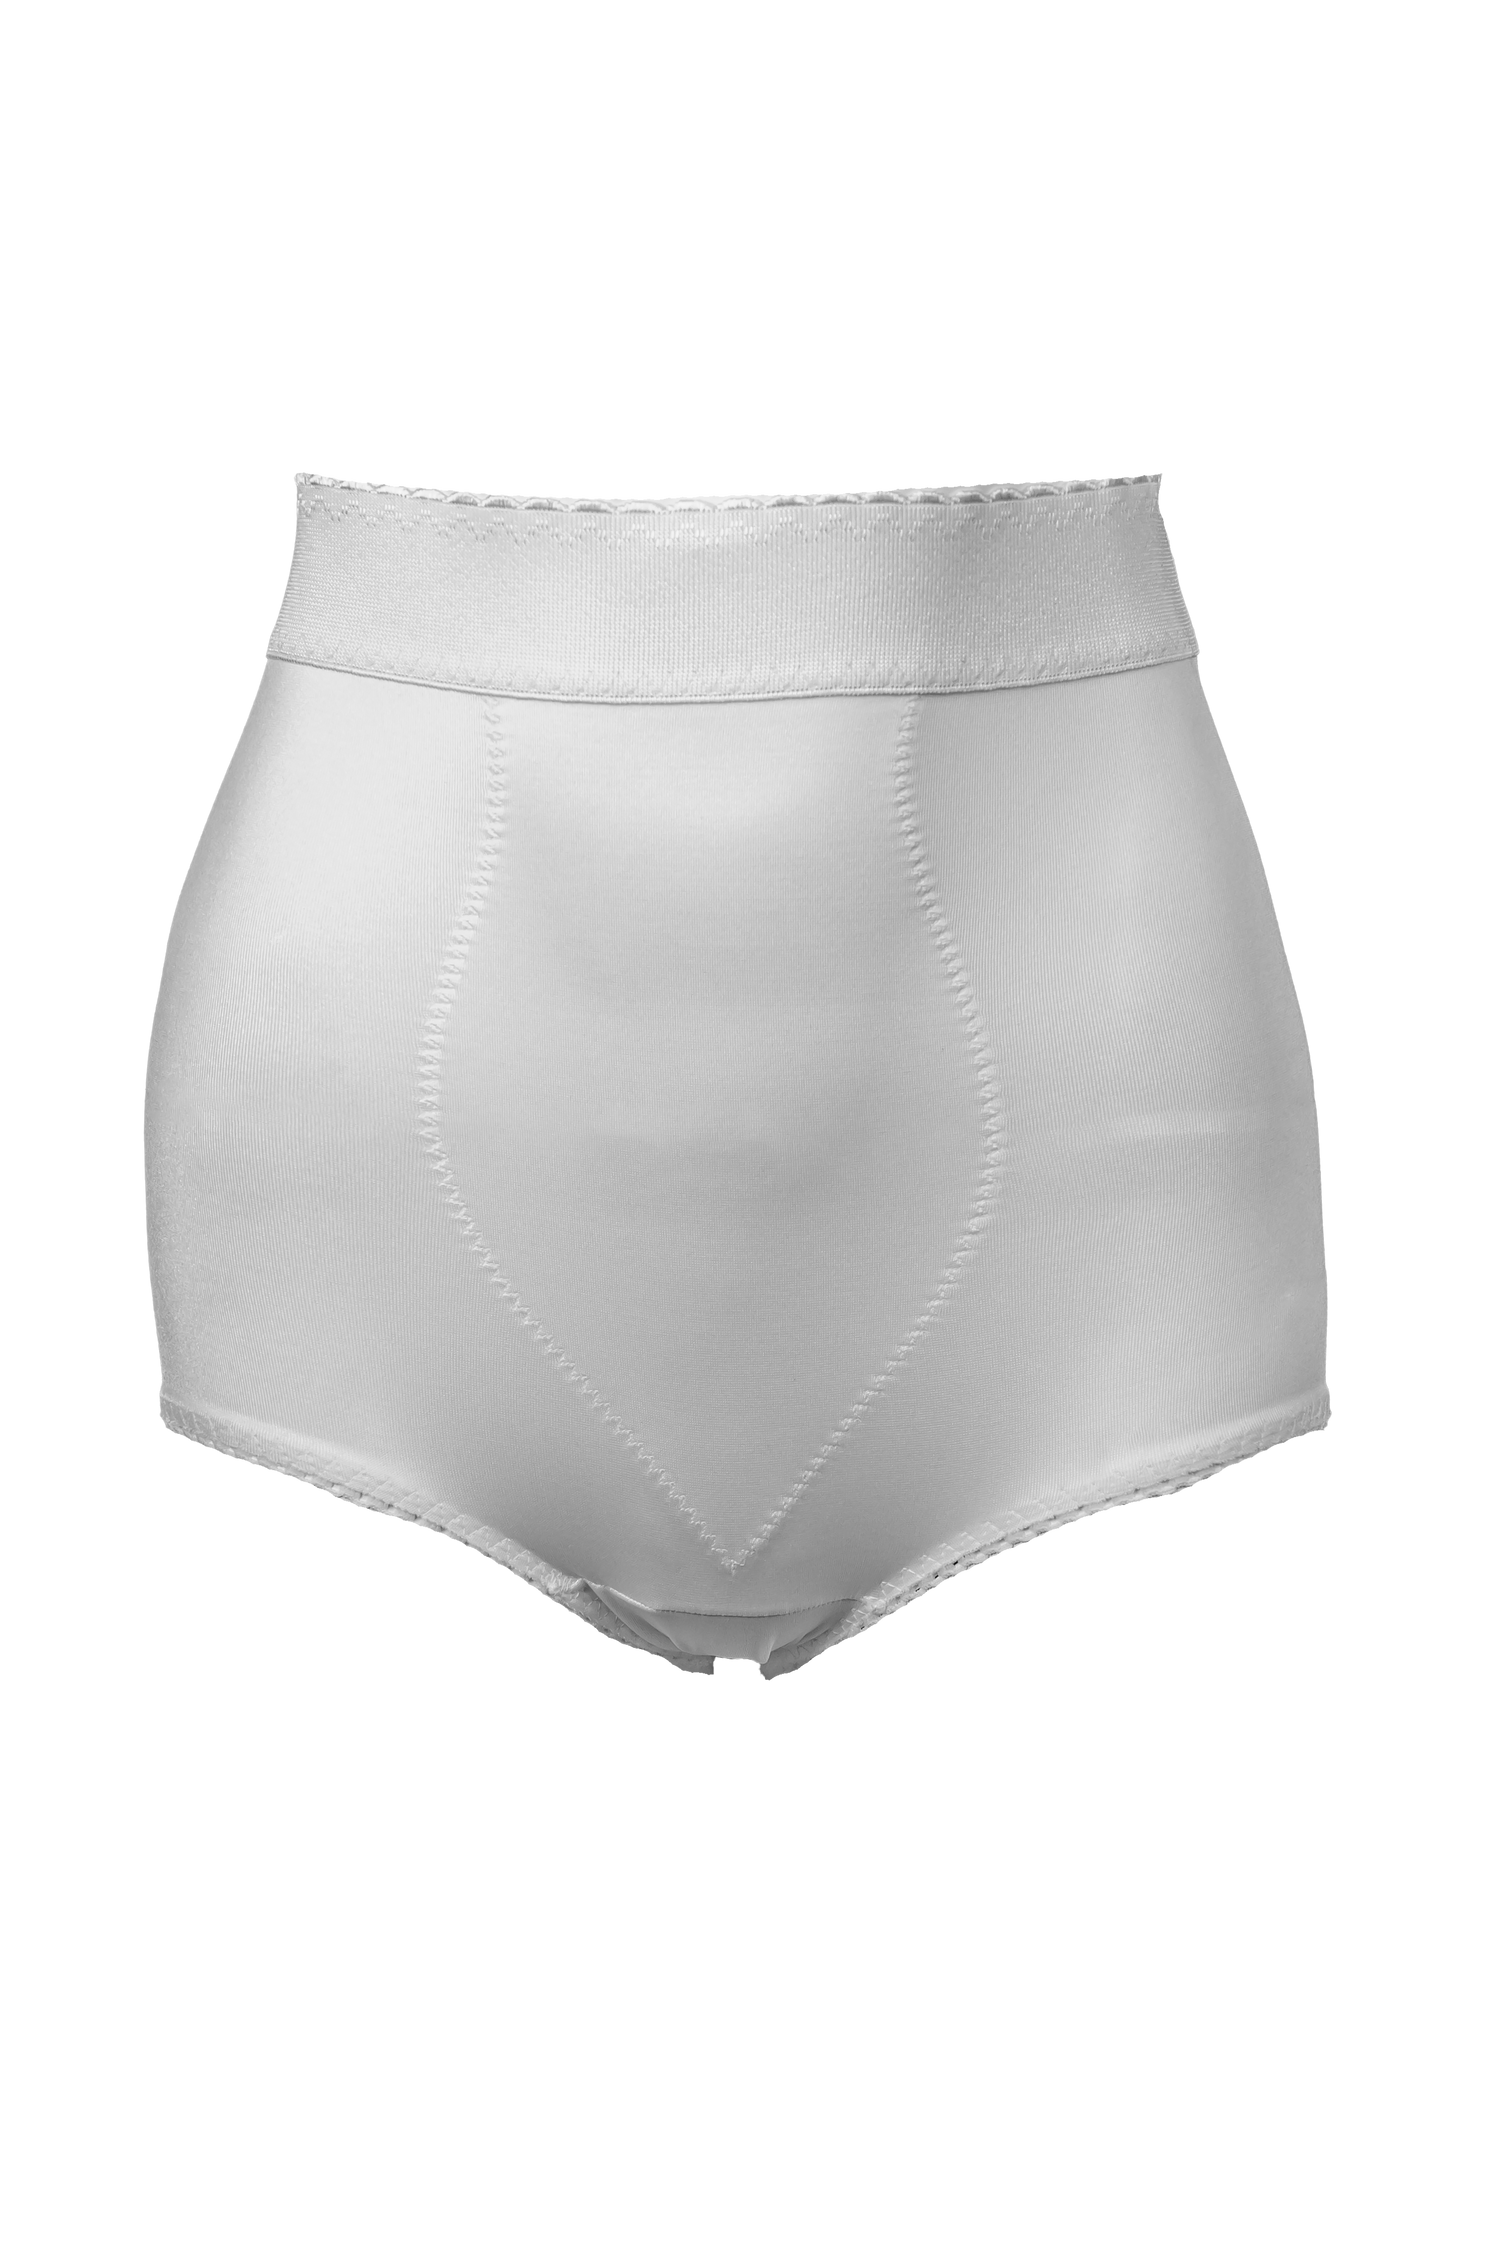 rygai 2Pcs/Set Adjustable Straps Pads Wire Free High Waist Bra Panties Set  Women Solid Color Seamless Sport Underwear,White,L 